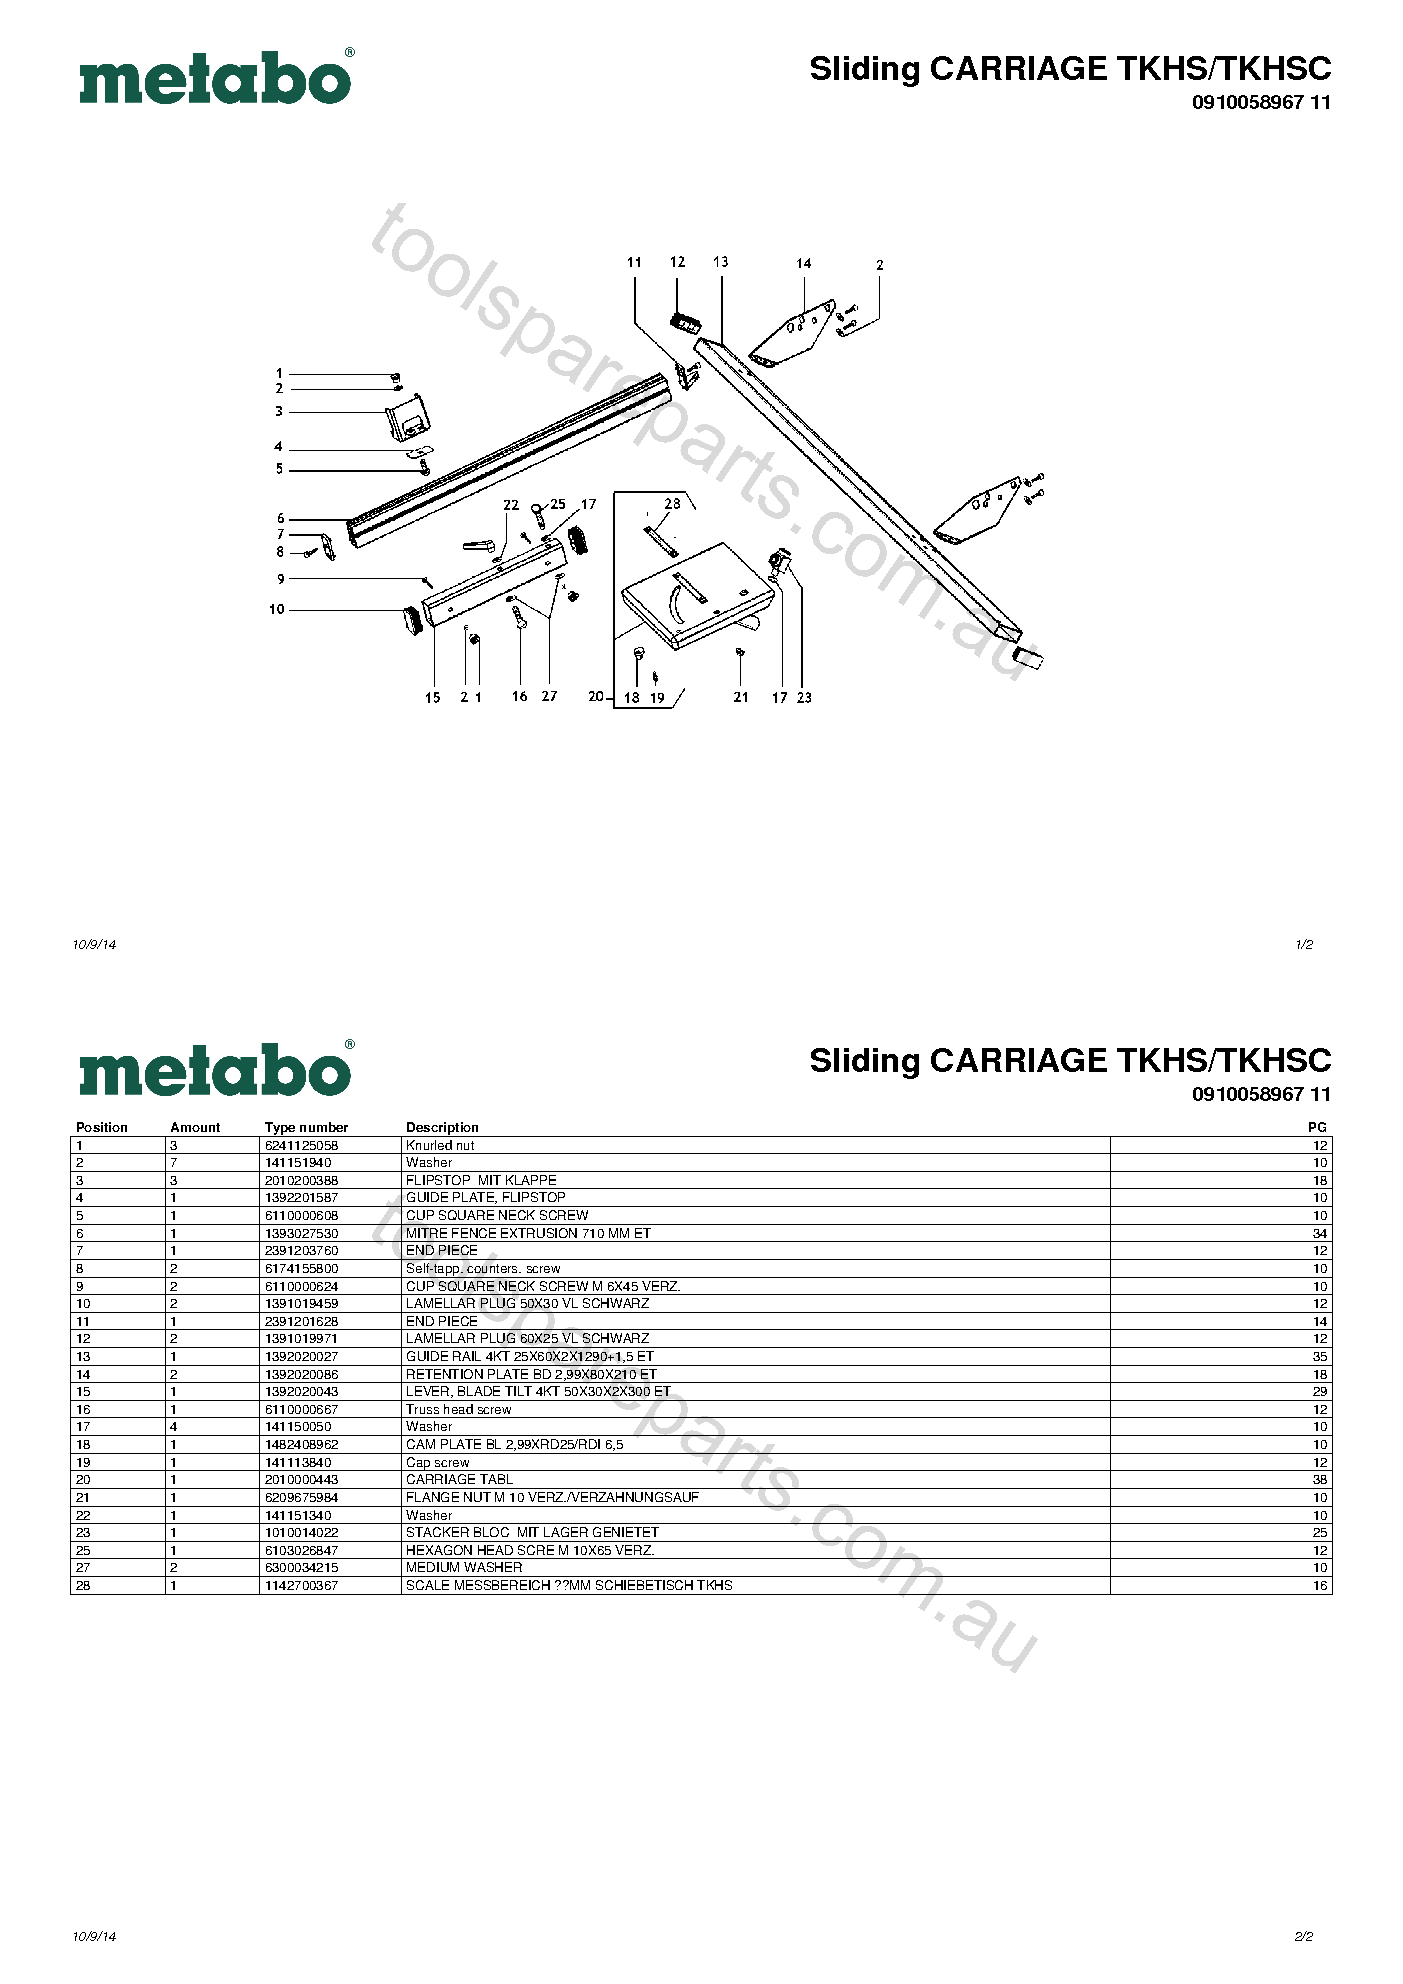 Metabo Sliding CARRIAGE TKHS/TKHSC 0910058967 11  Diagram 1